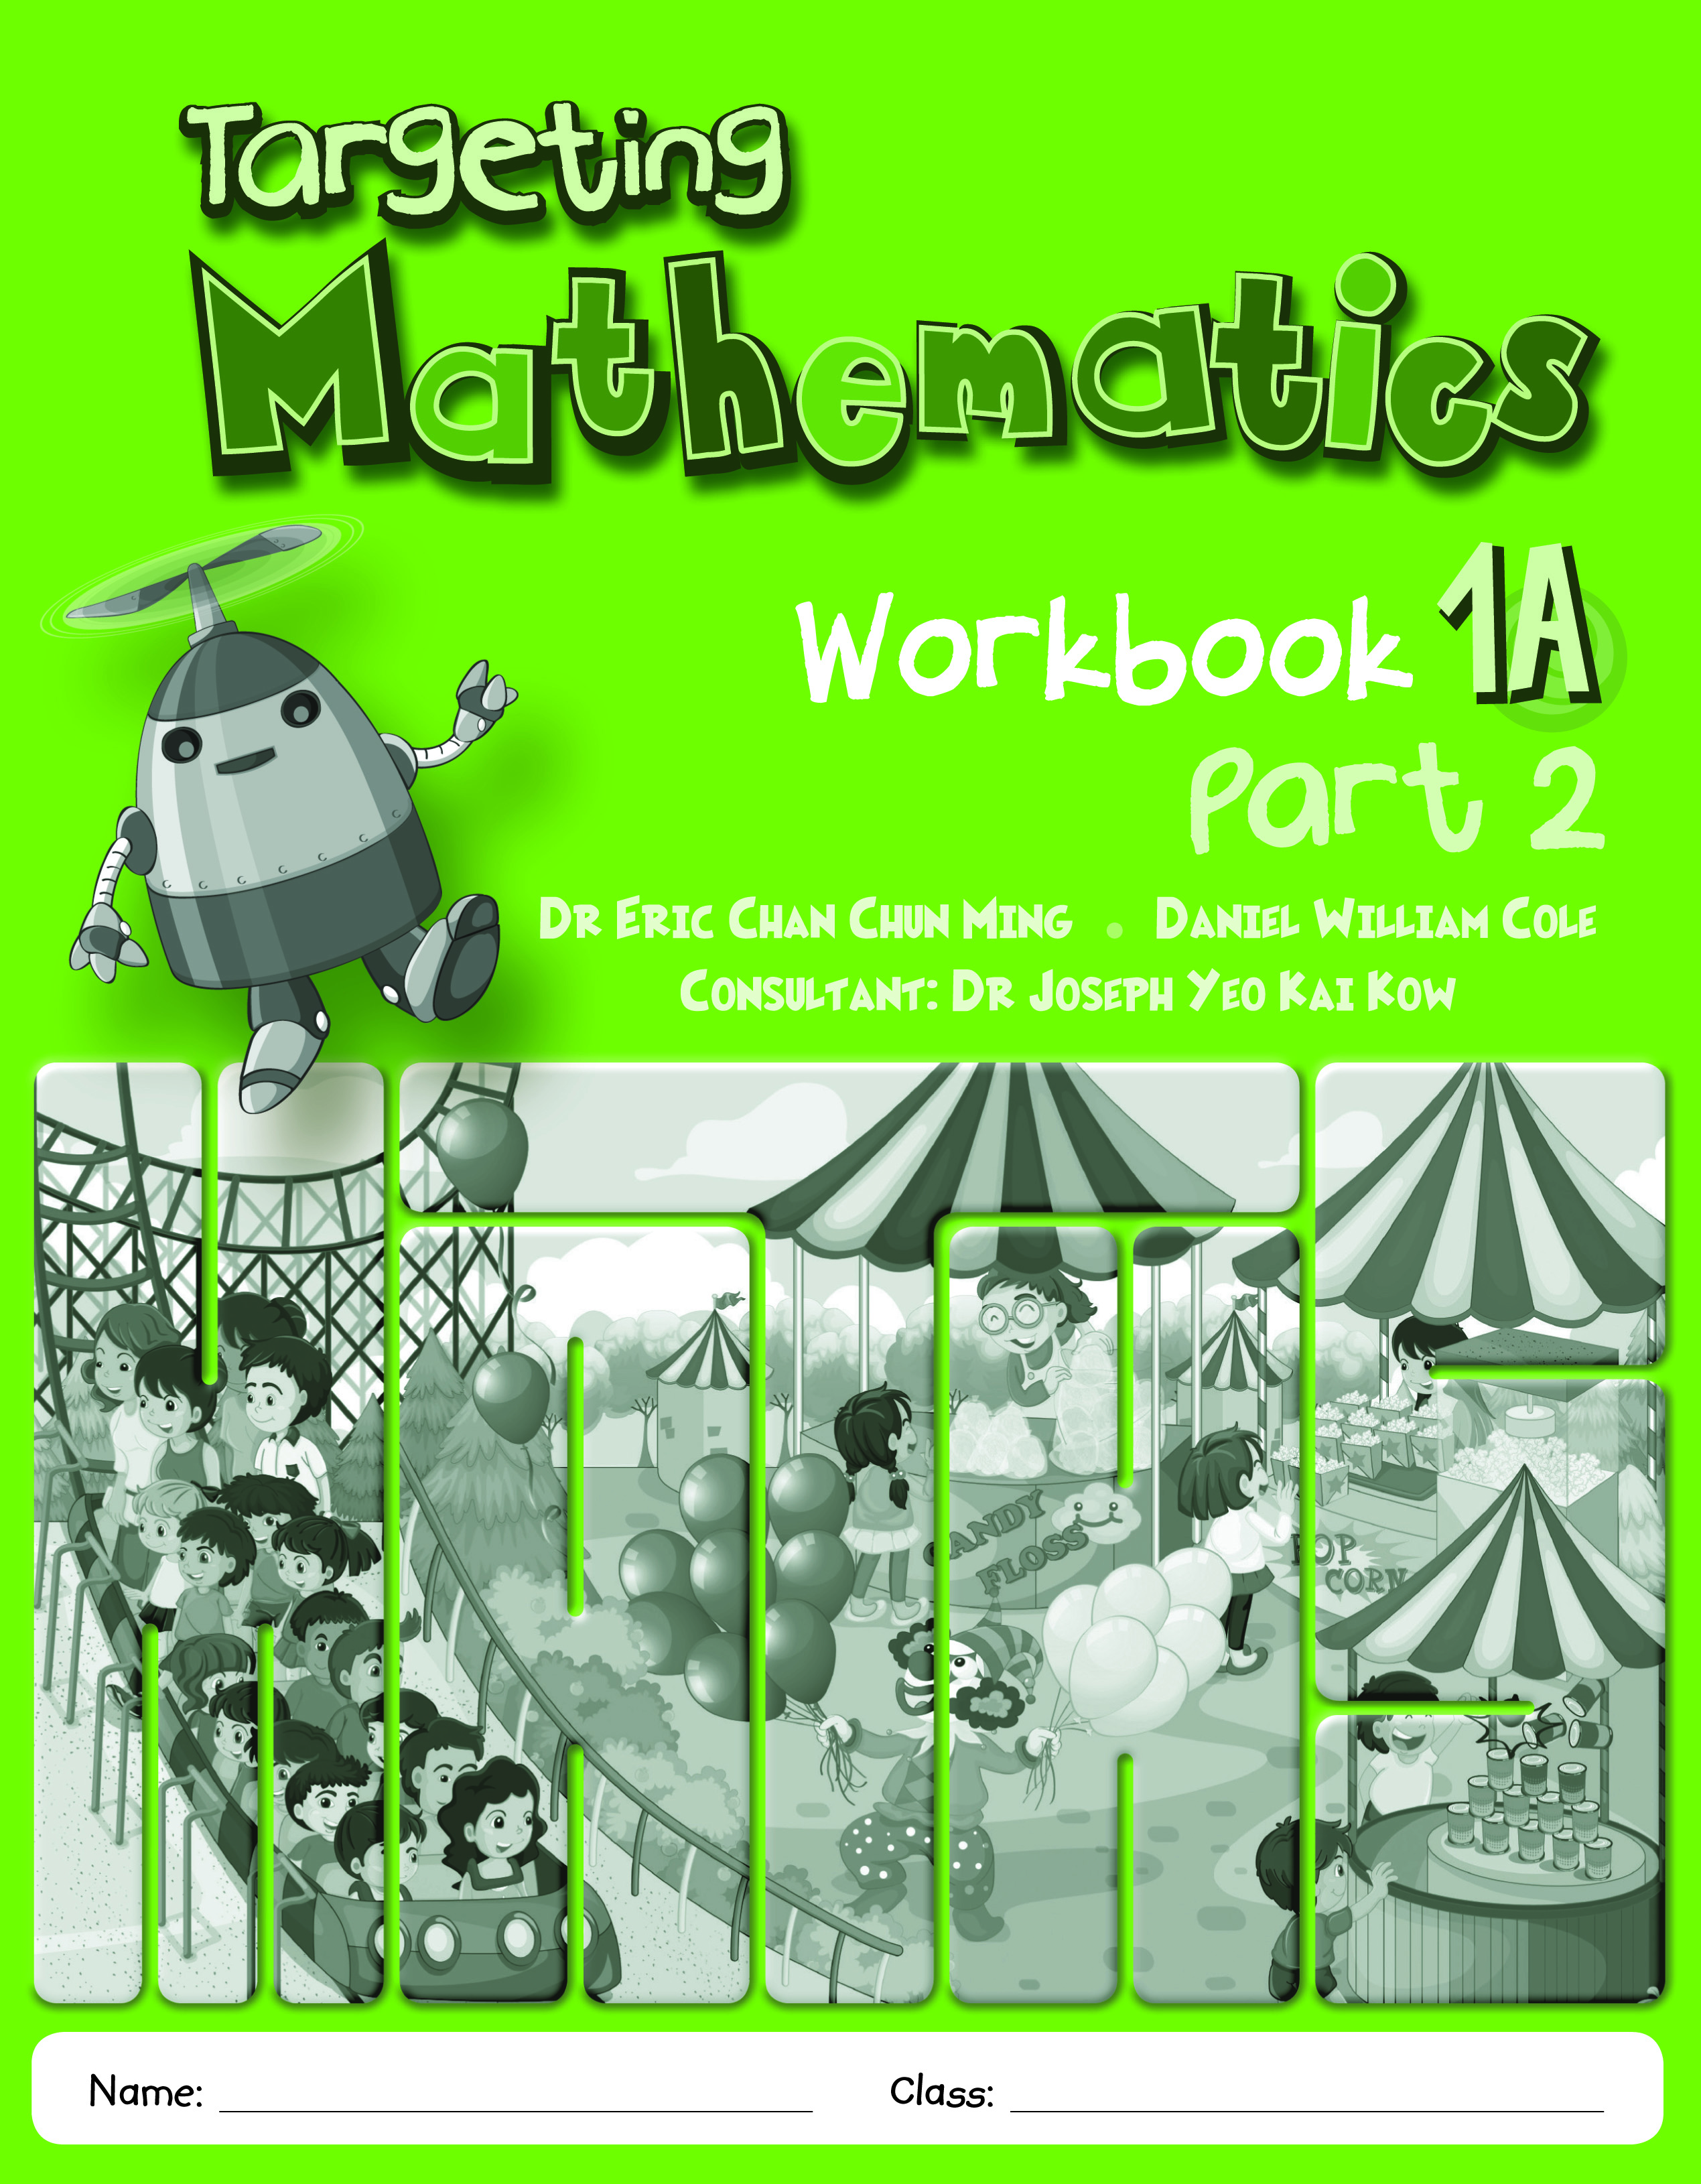 Targeting Mathematics 1A Workbook Part 2